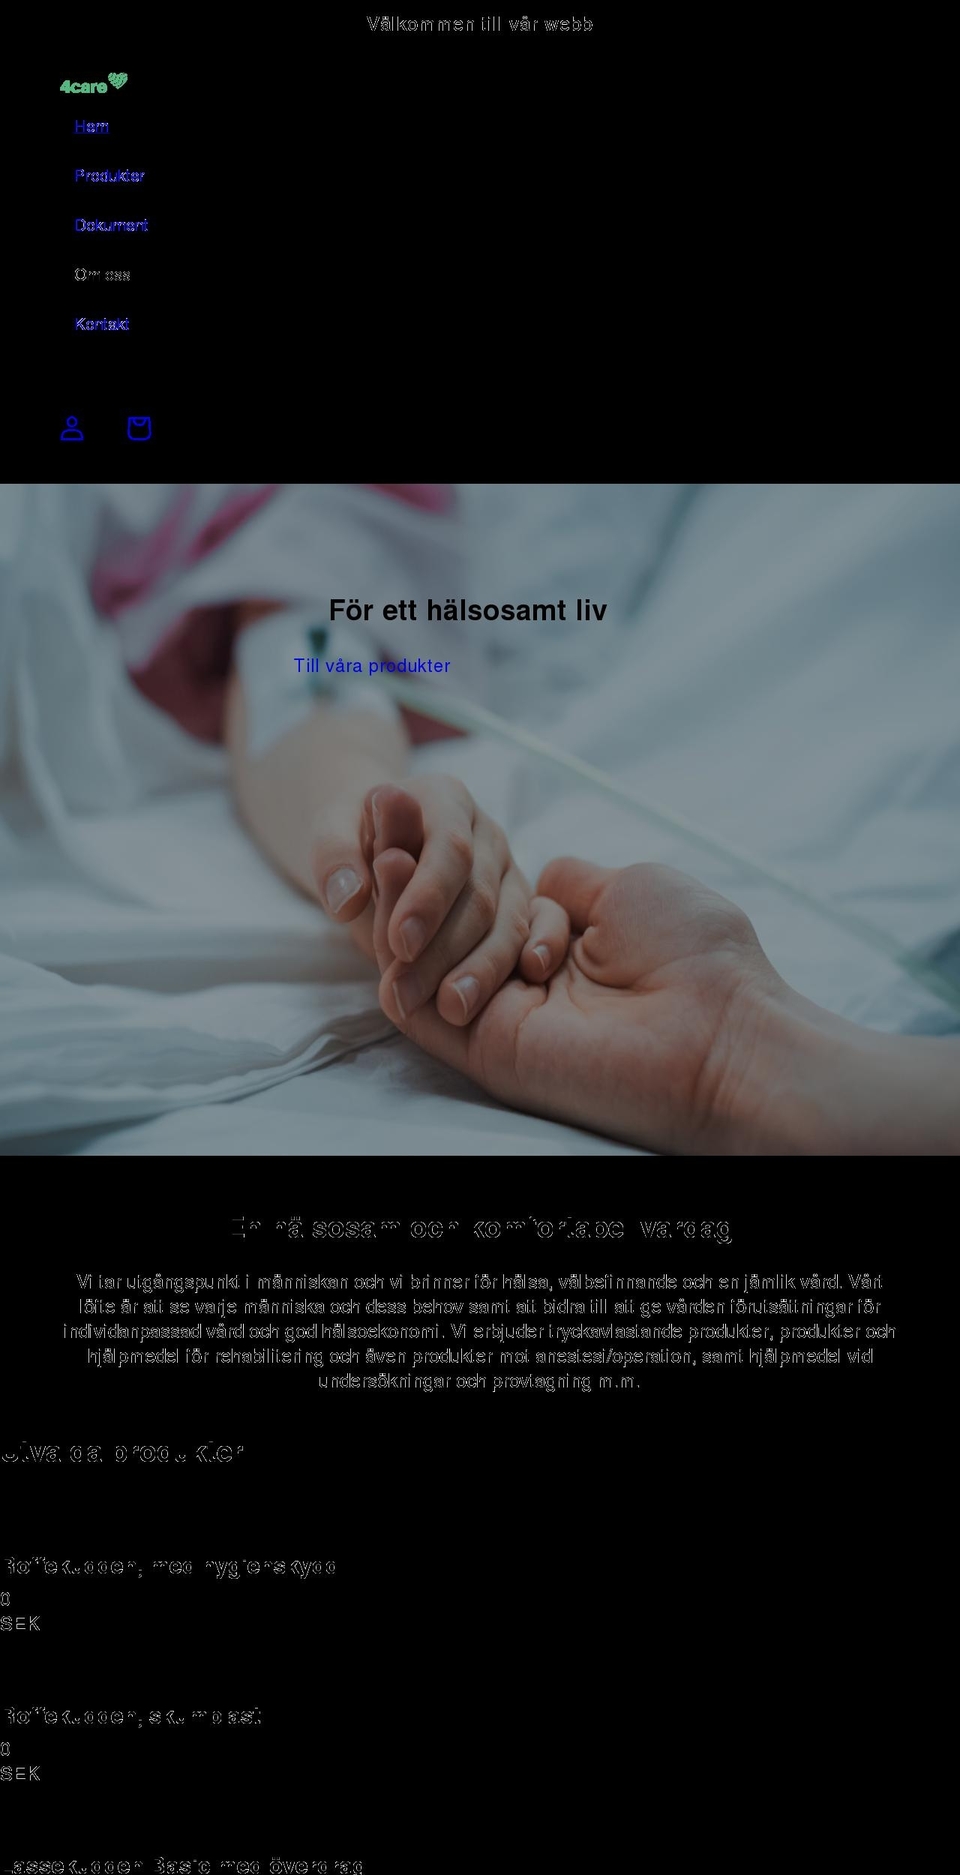 4care.nu shopify website screenshot